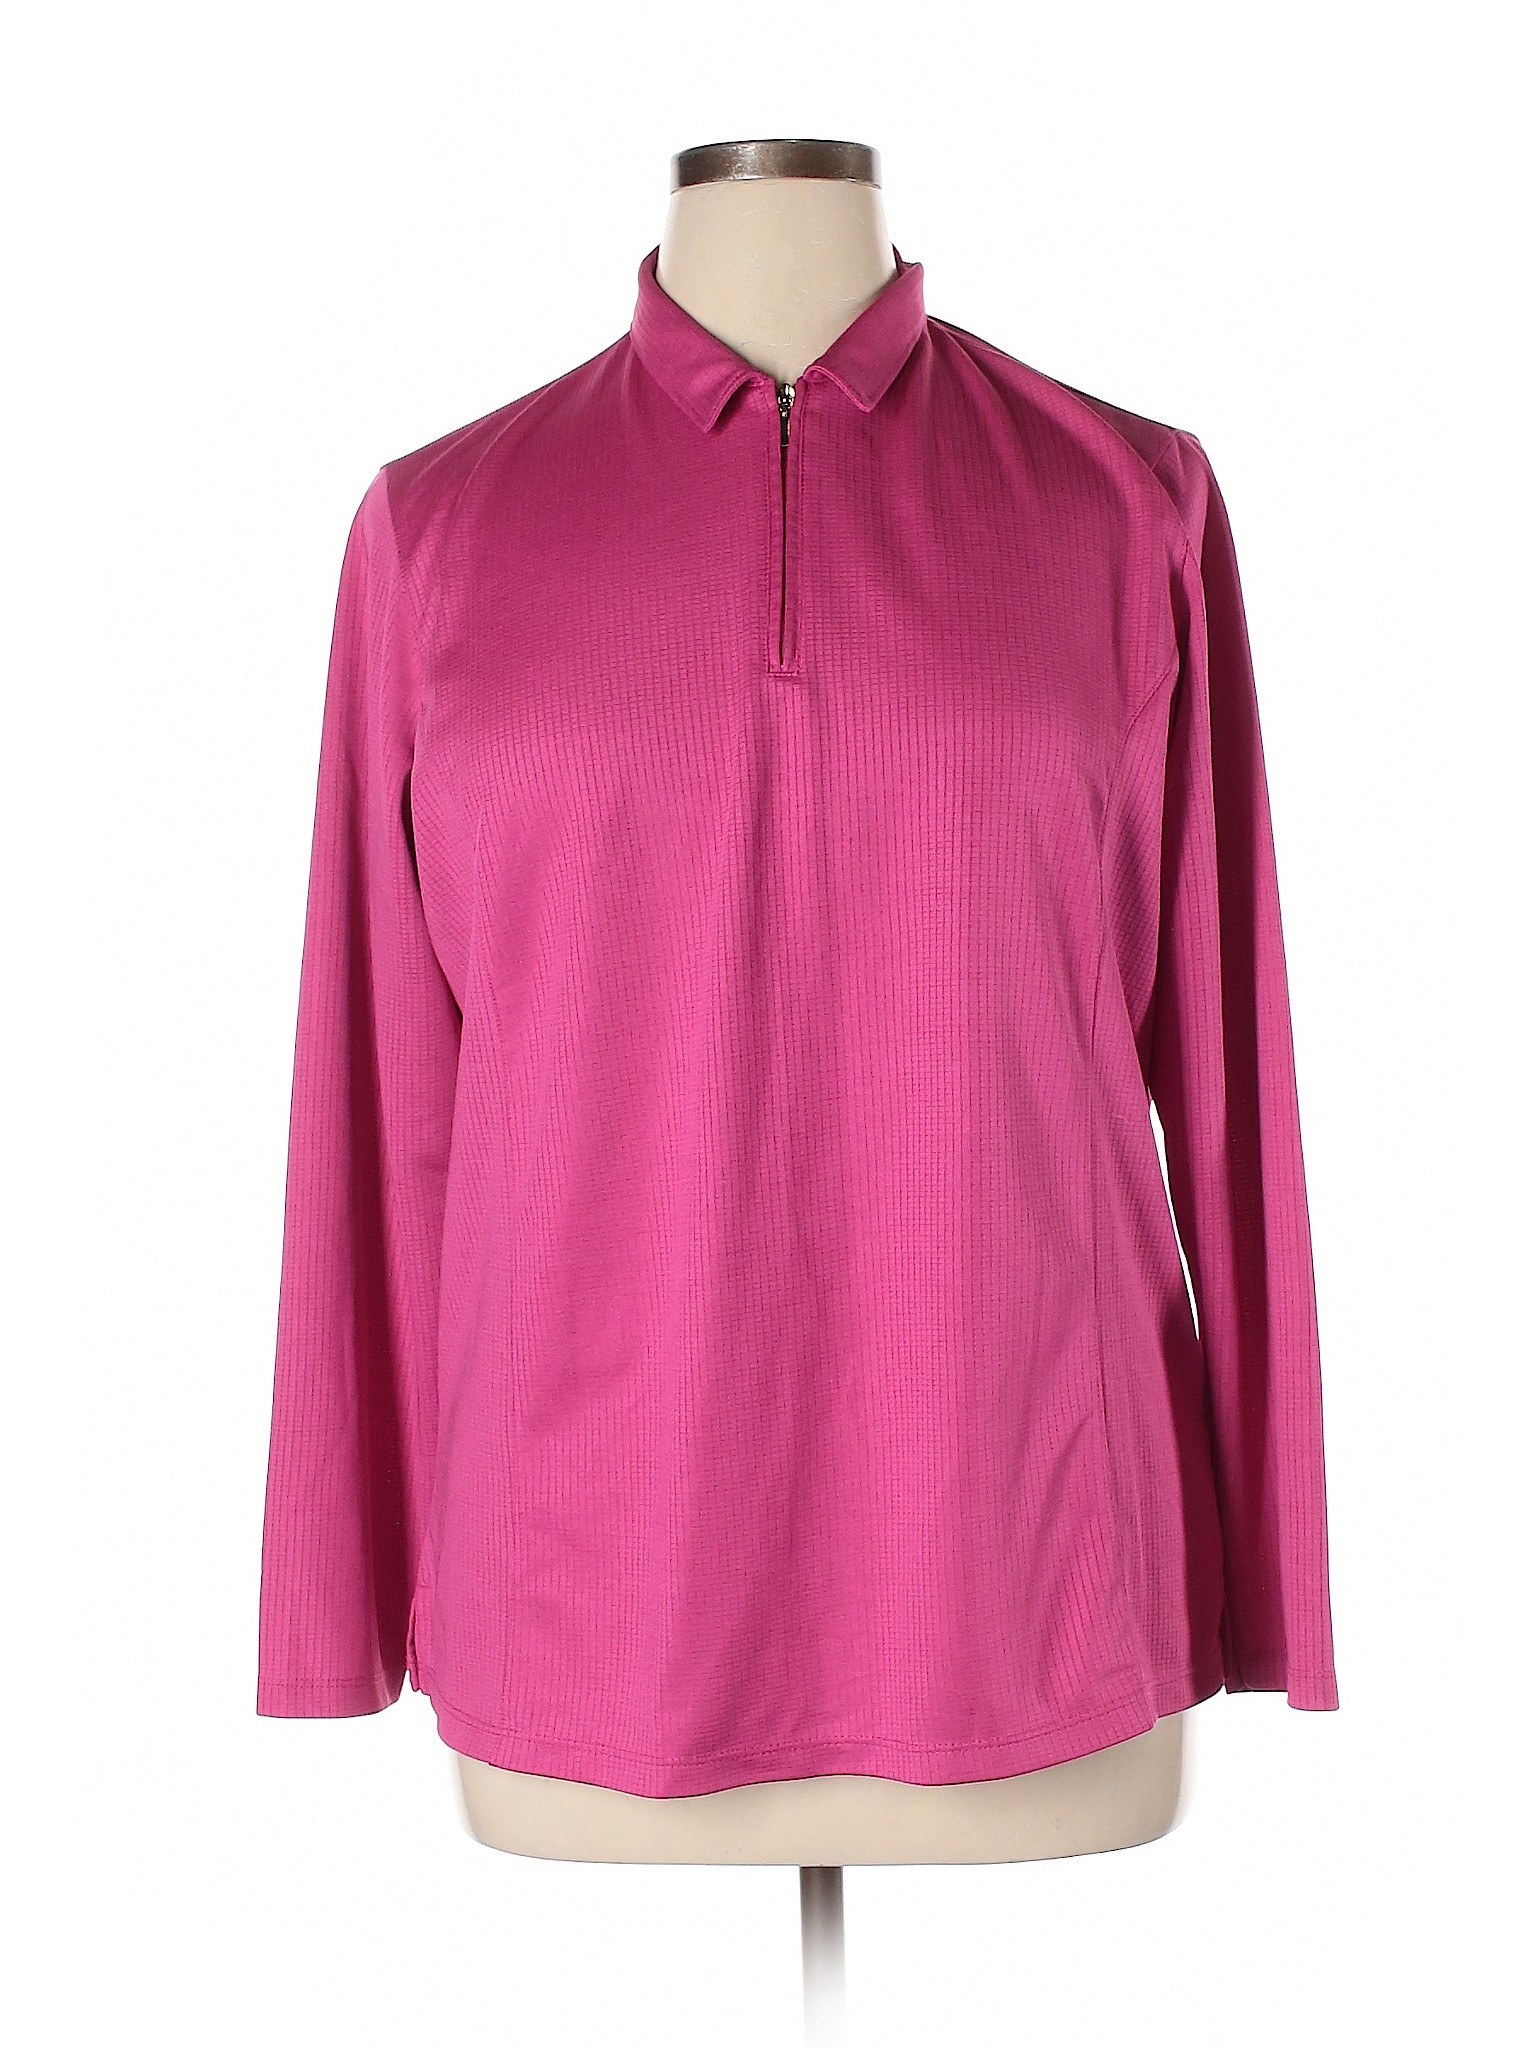 Bermuda Sands Women Pink Track Jacket XL | eBay